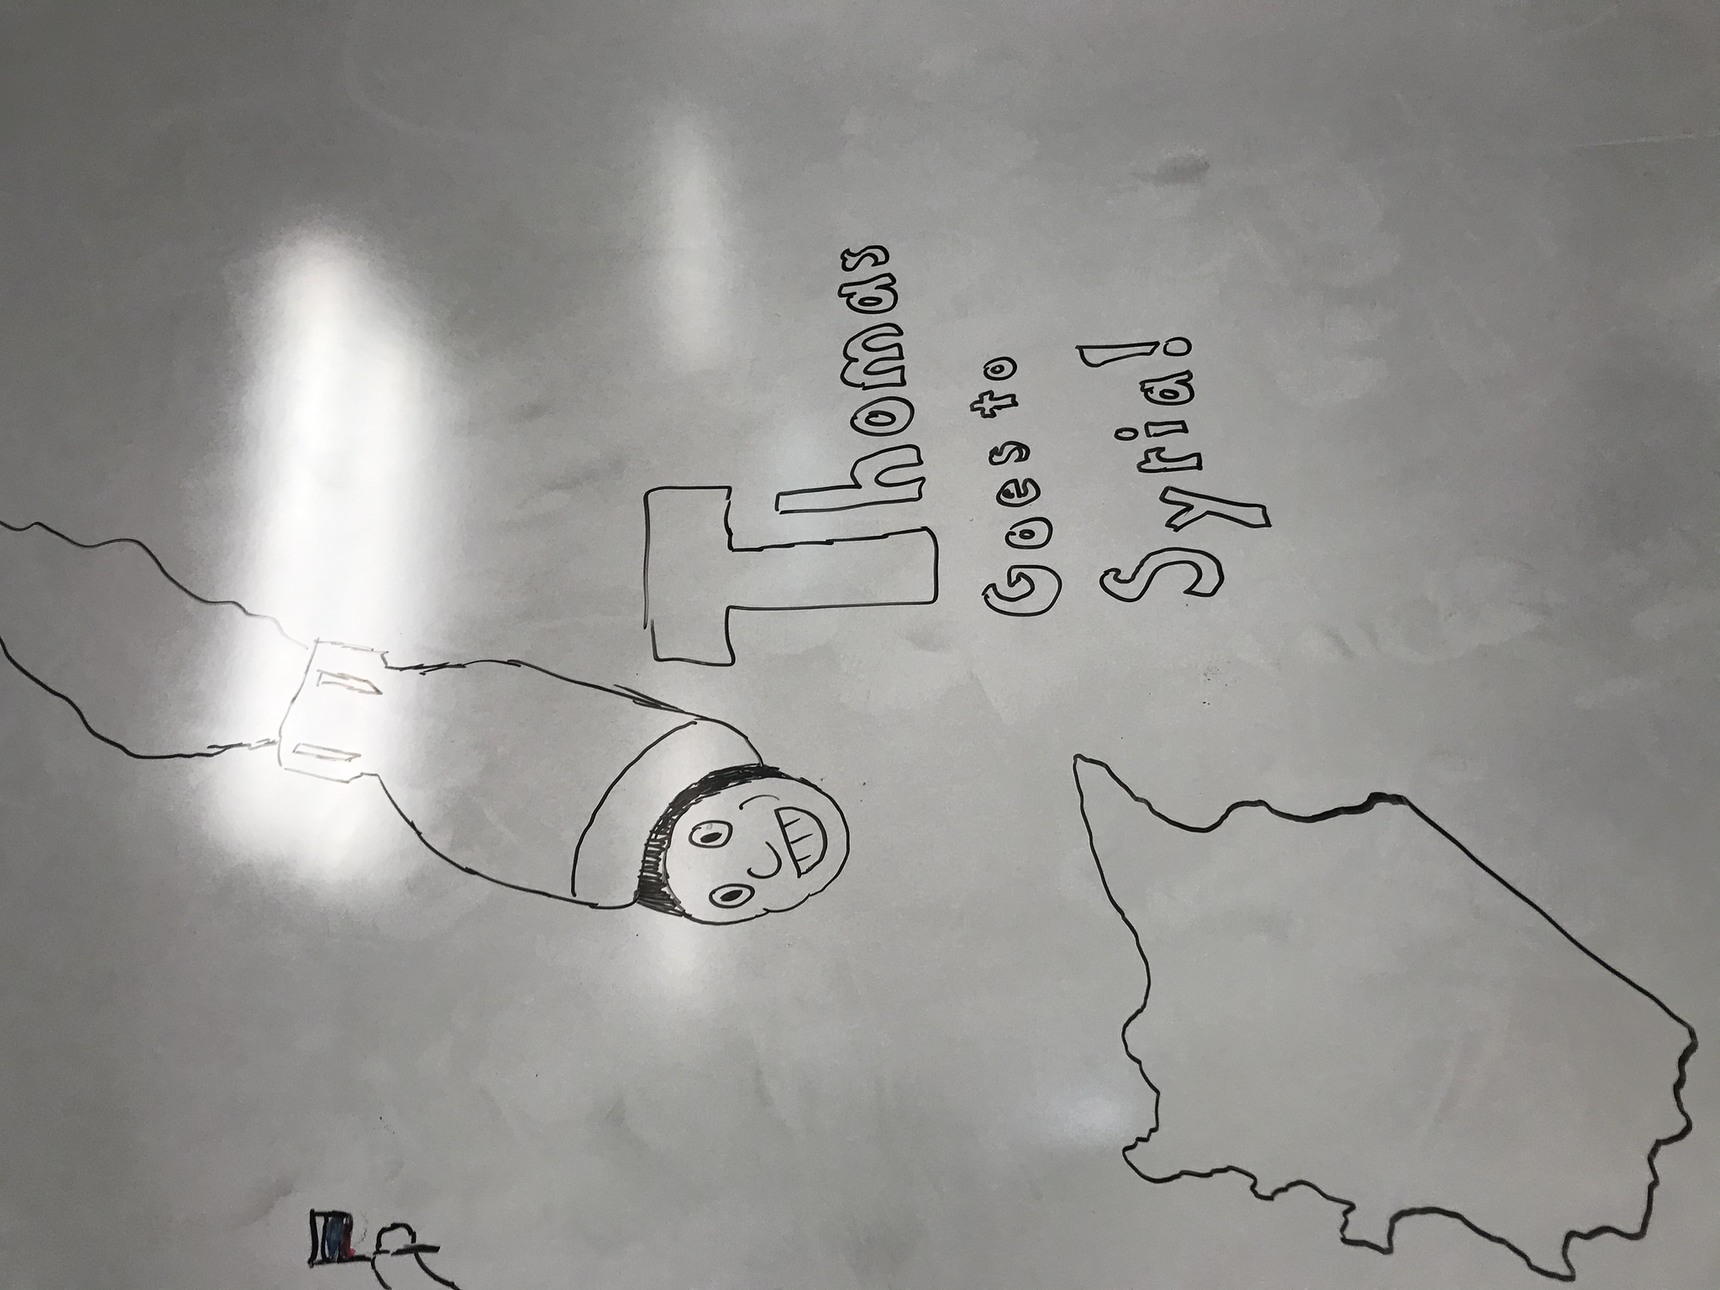 I drew this on my algebra teacher’s white board at lunch today - meme